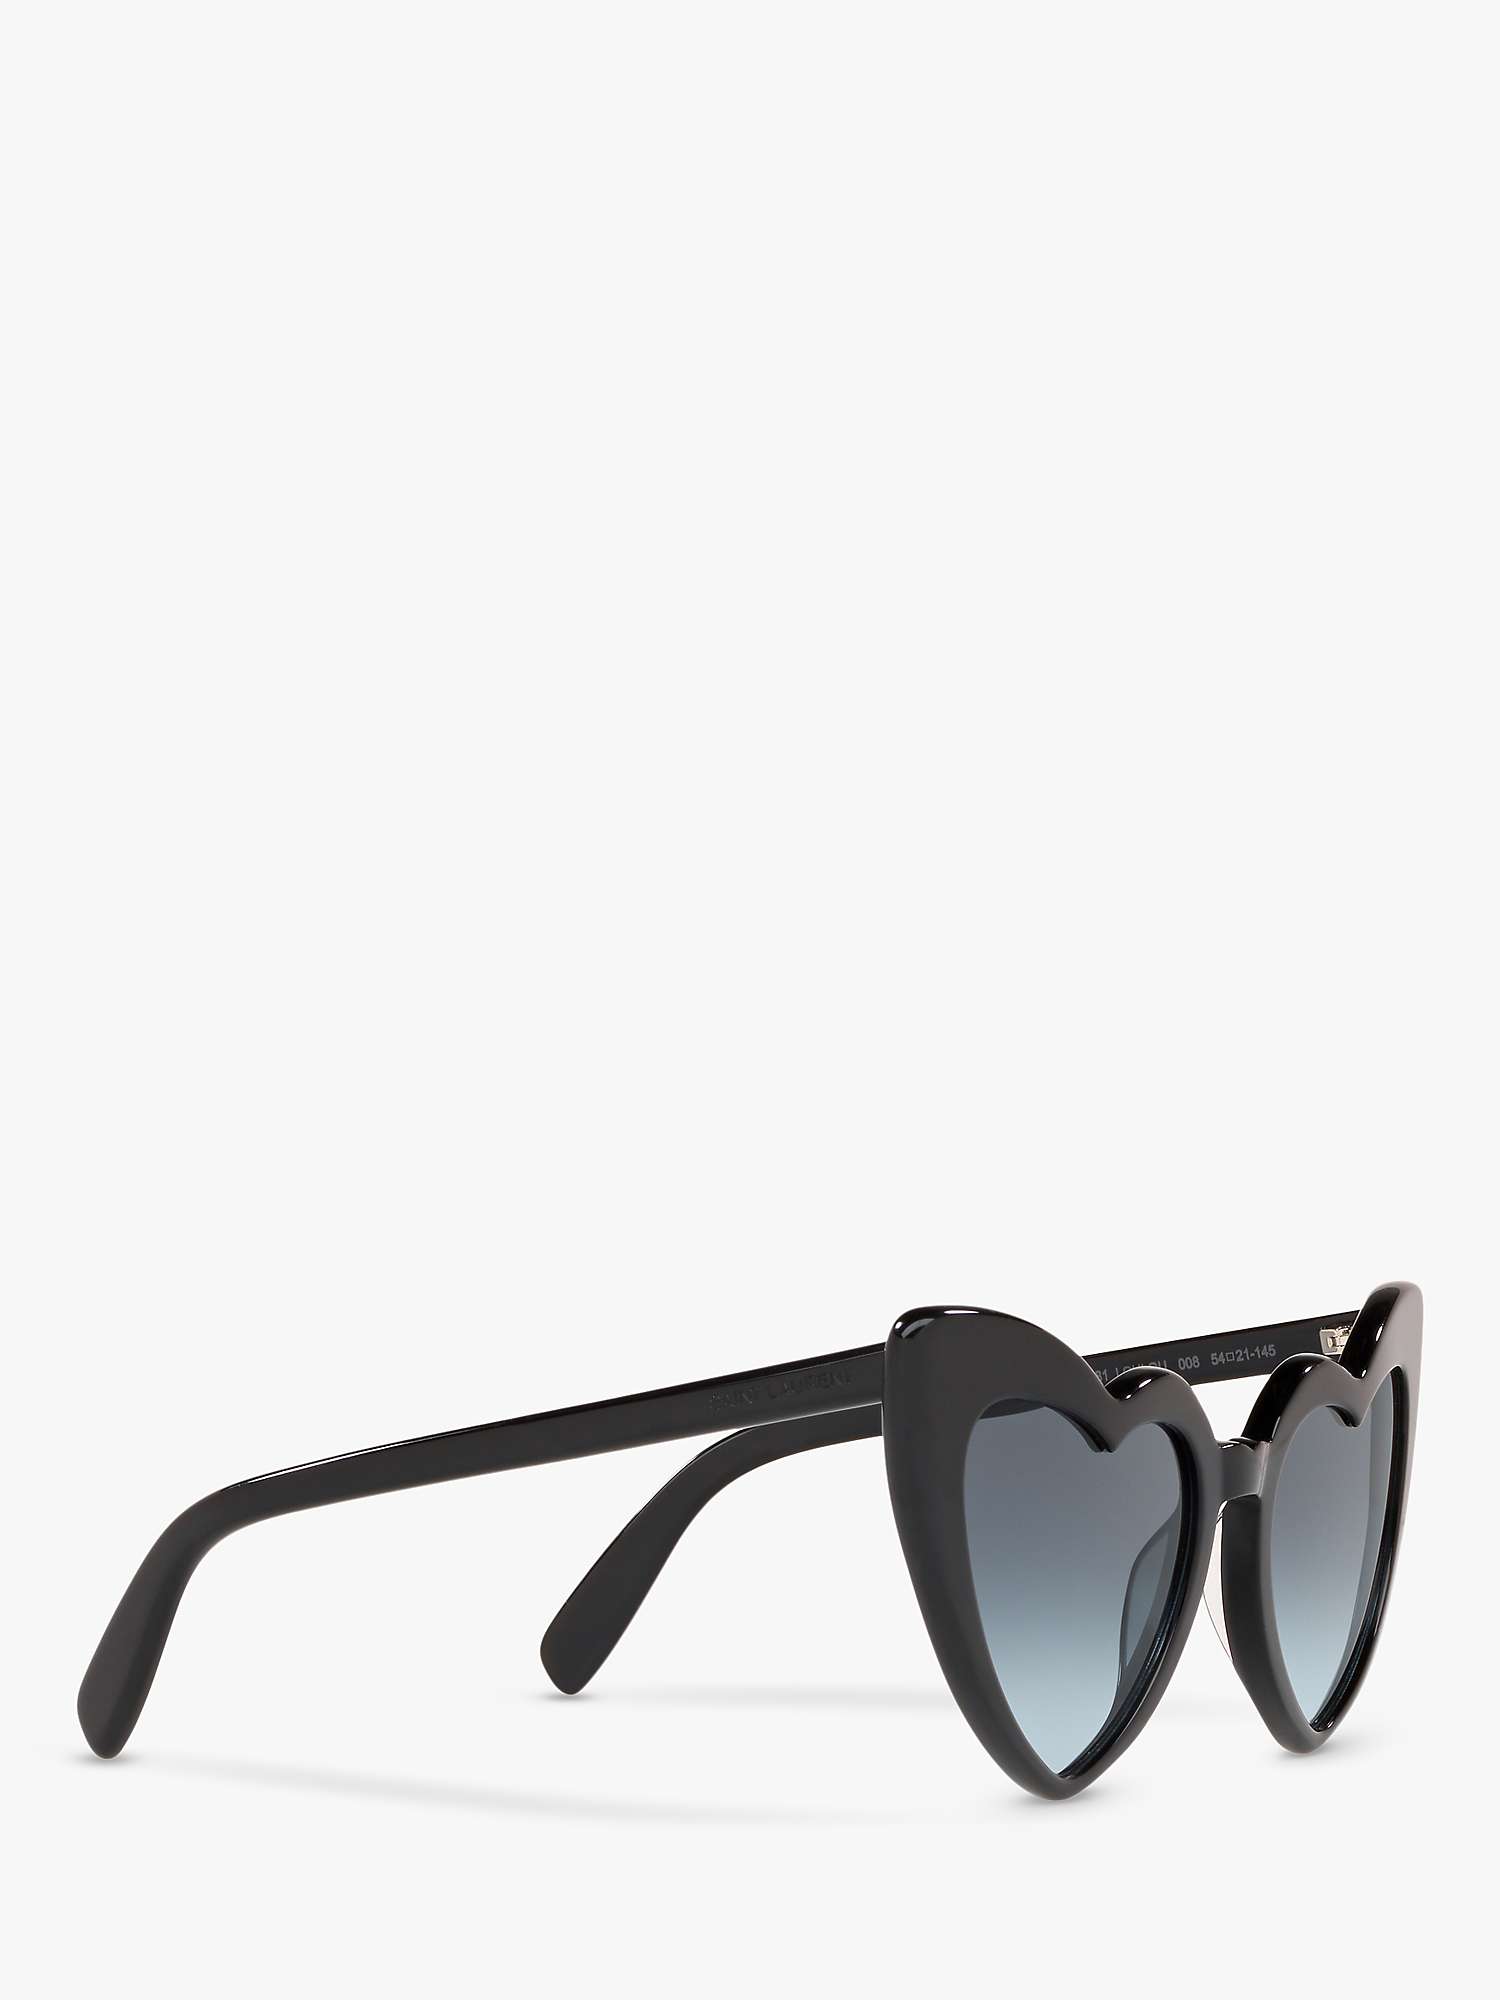 Buy Yves Saint Laurent SL181 Women's Loulou Heart Shaped Sunglasses, Black/Grey Gradient Online at johnlewis.com